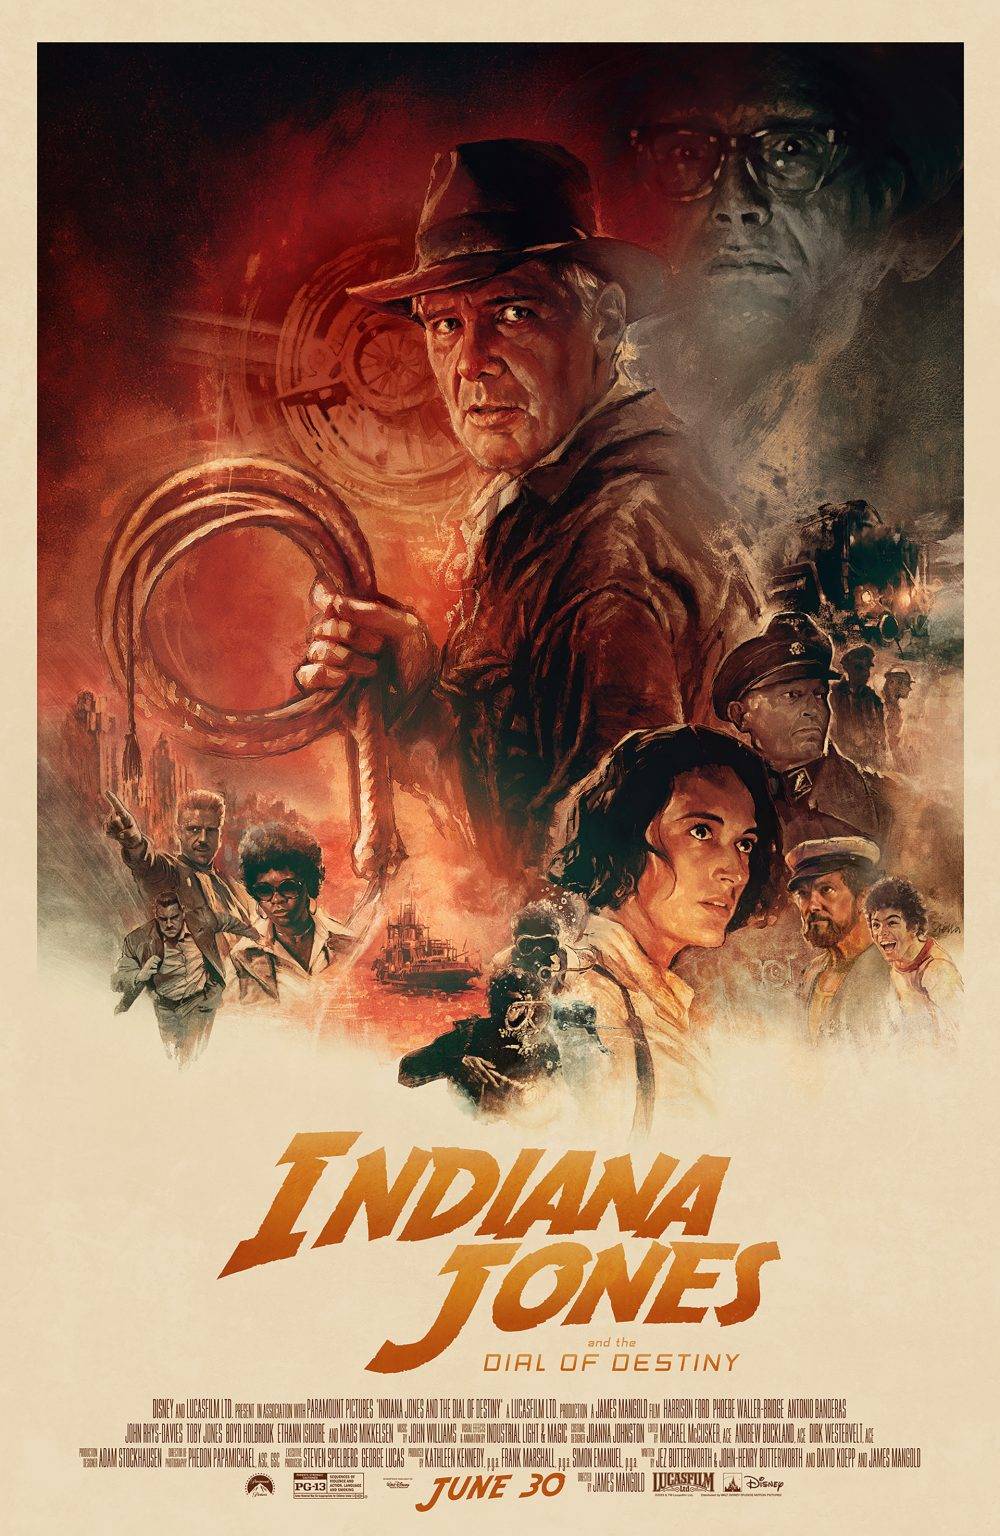 New 'Indiana Jones' Installment Gets Surprising Update - Inside the Magic